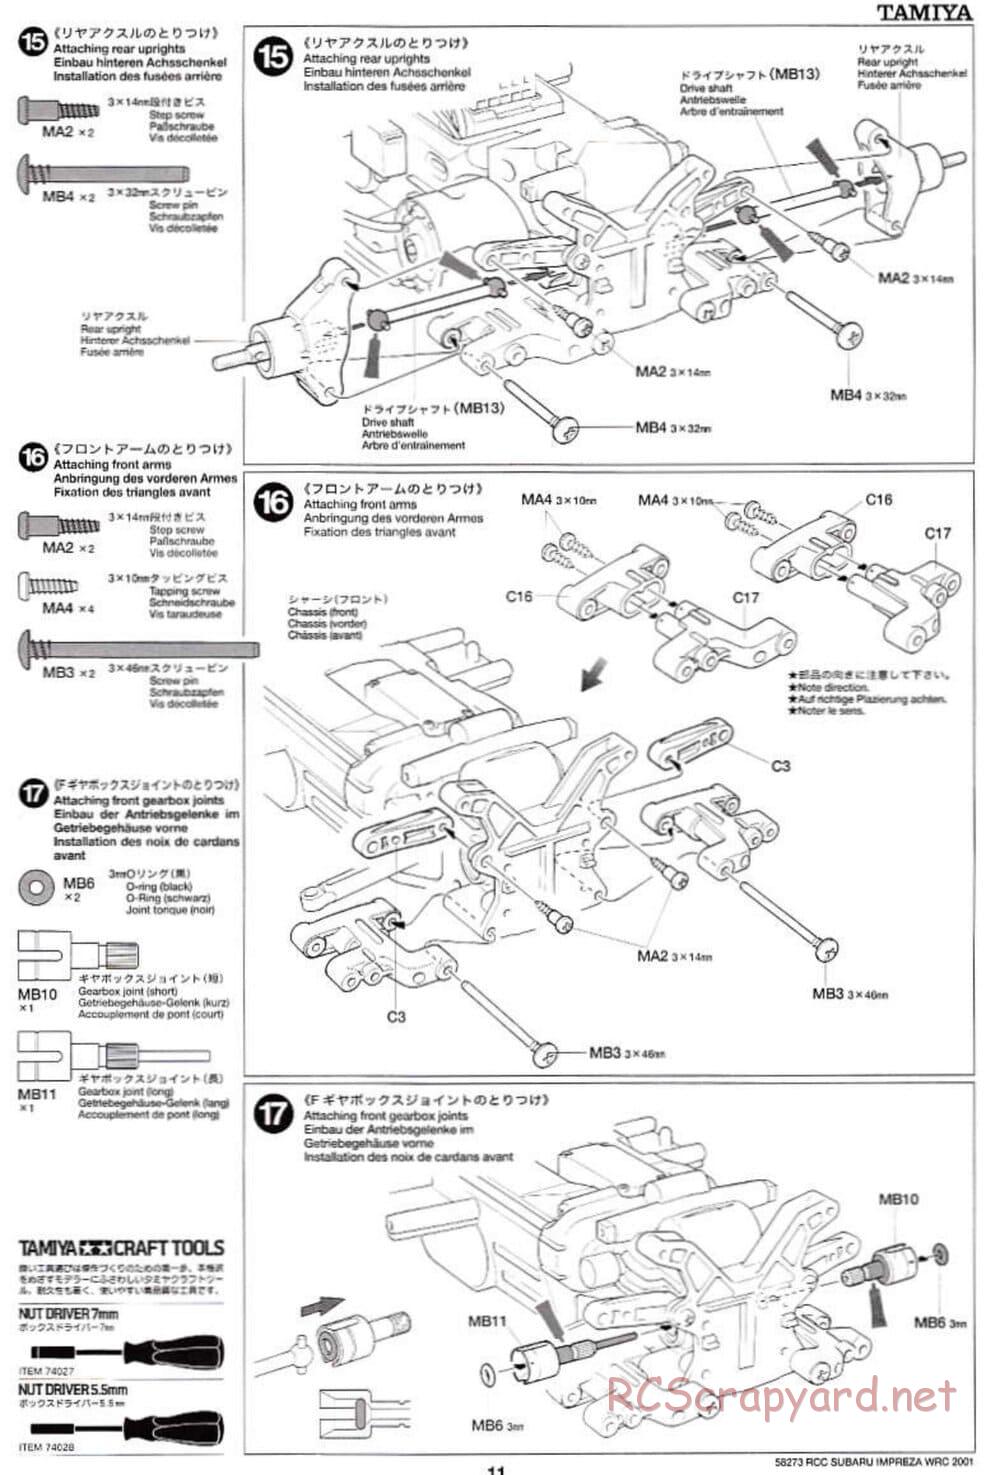 Tamiya - Subaru Impreza WRC 2001 - TL-01 Chassis - Manual - Page 11